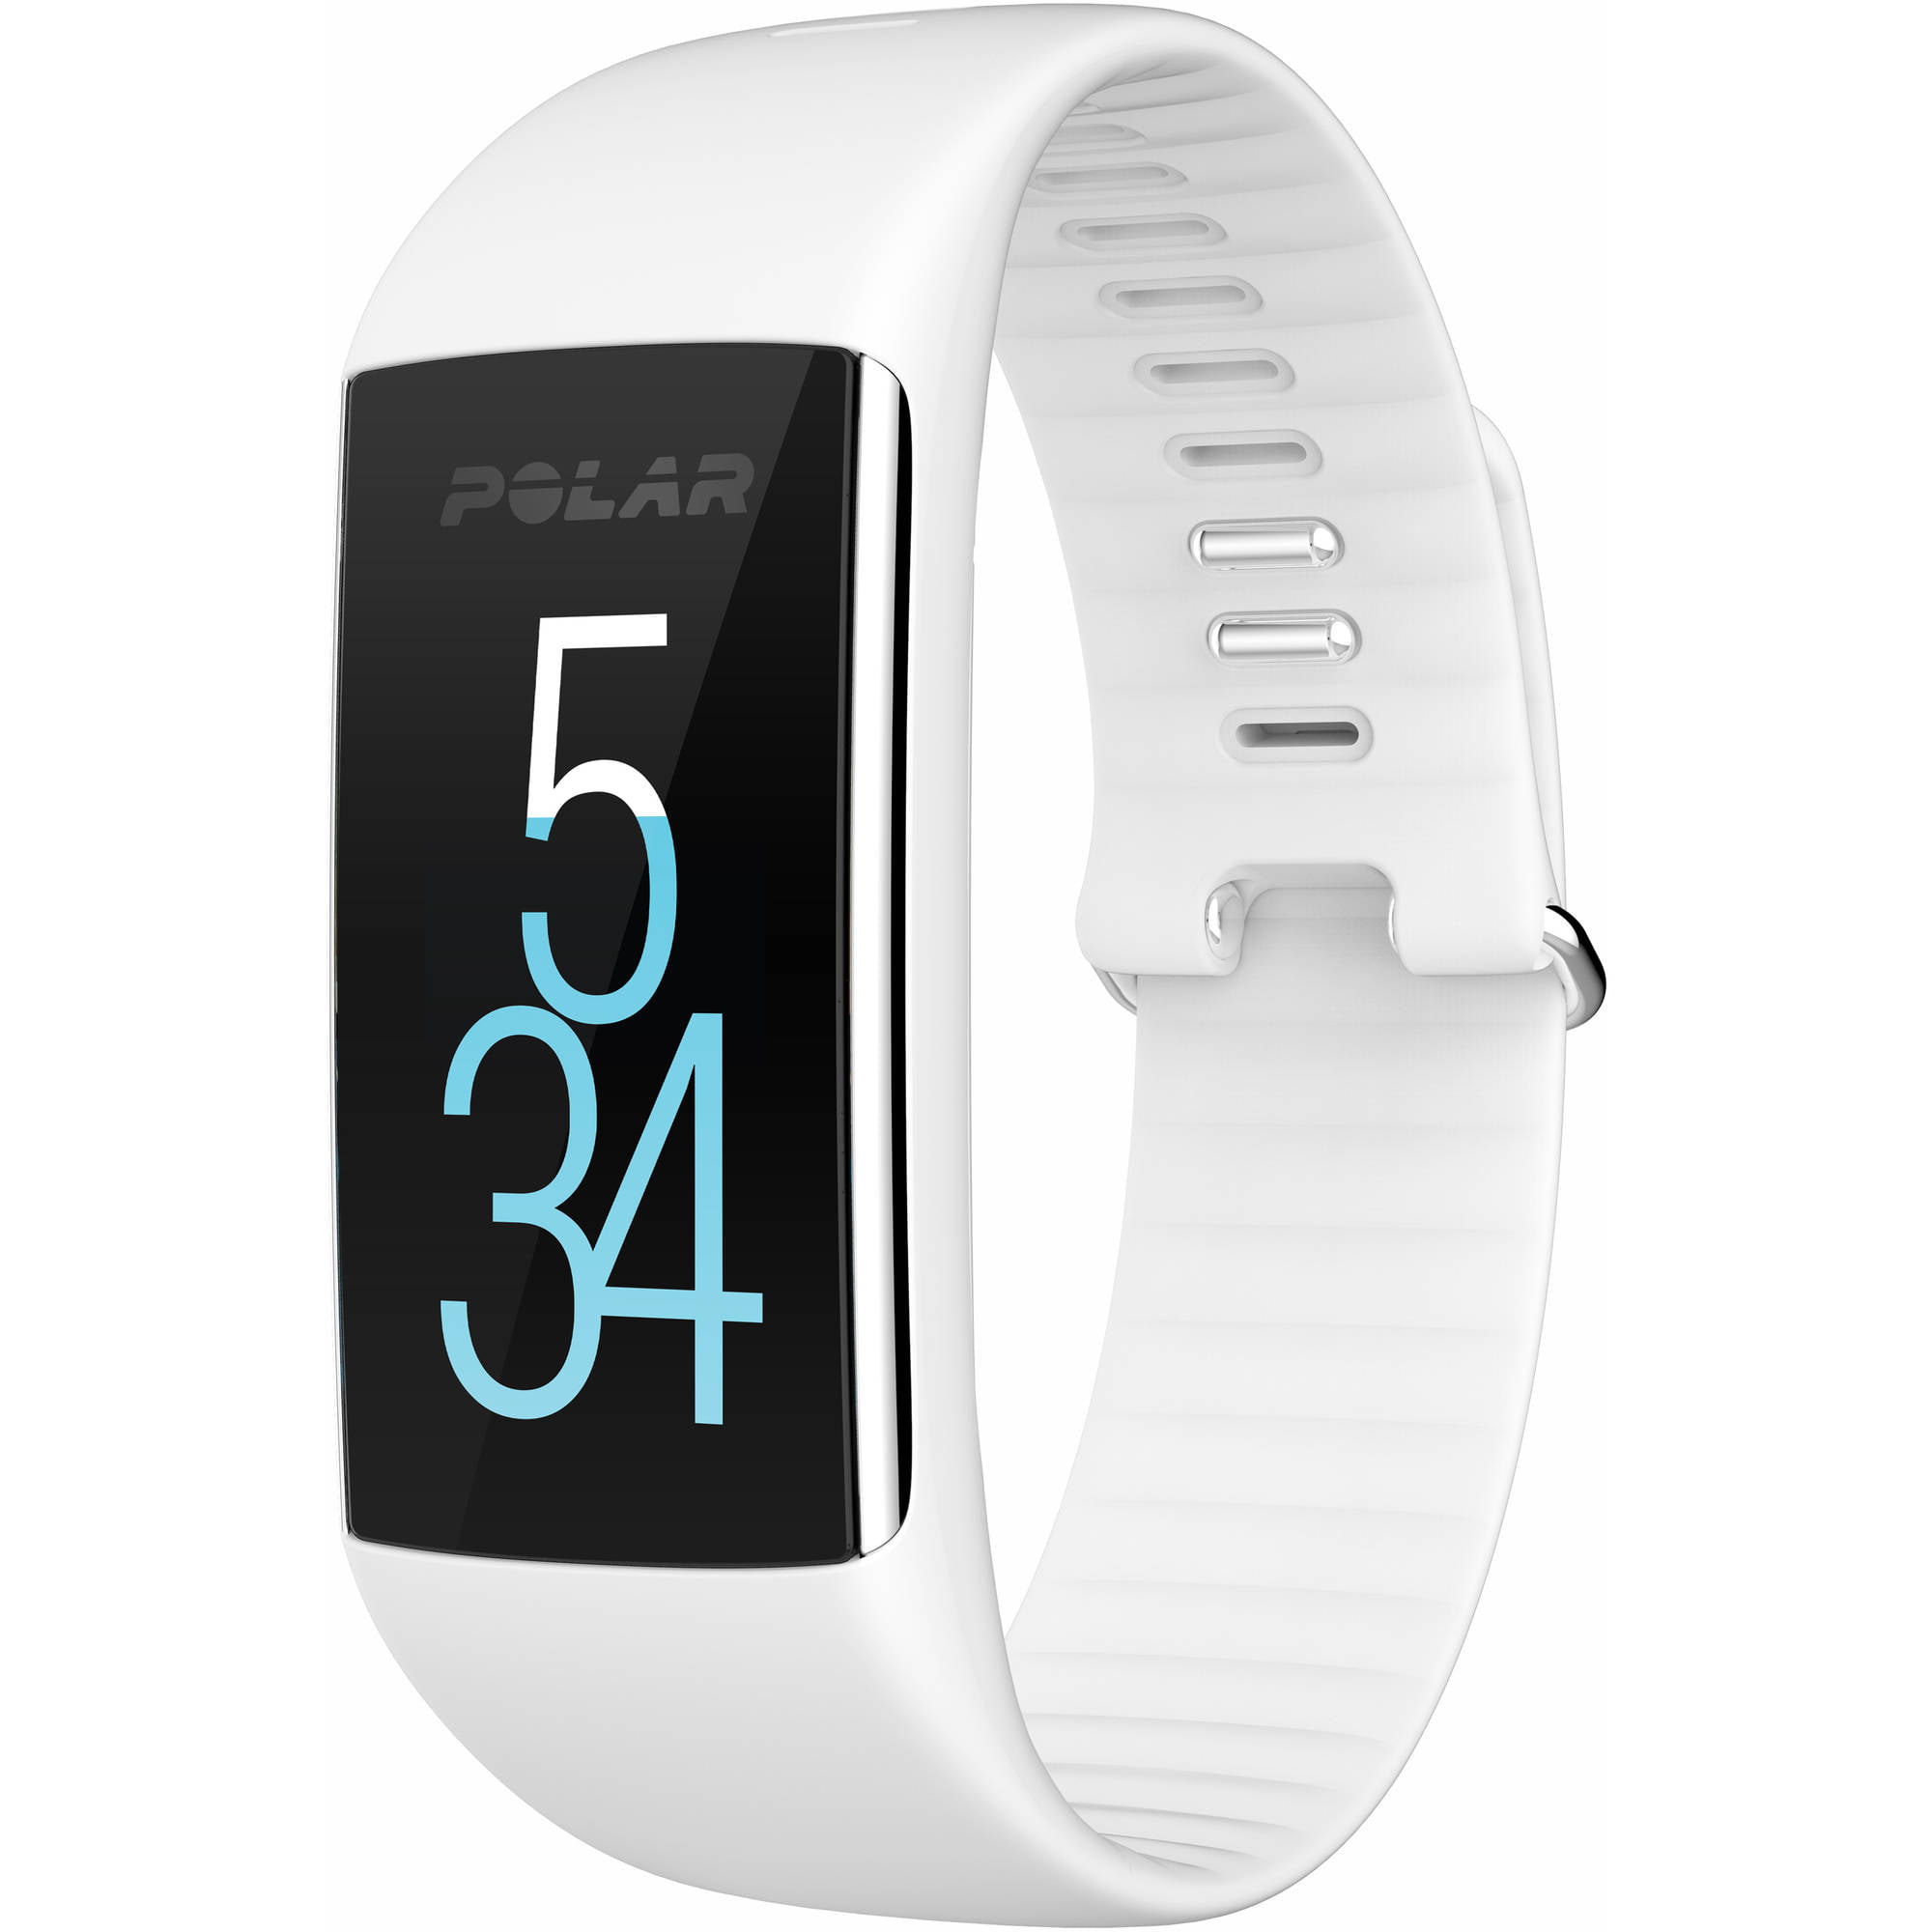 øverste hak Symptomer Allergi Polar A360 Fitness Tracker with Wrist Heart Rate Monitor - Walmart.com